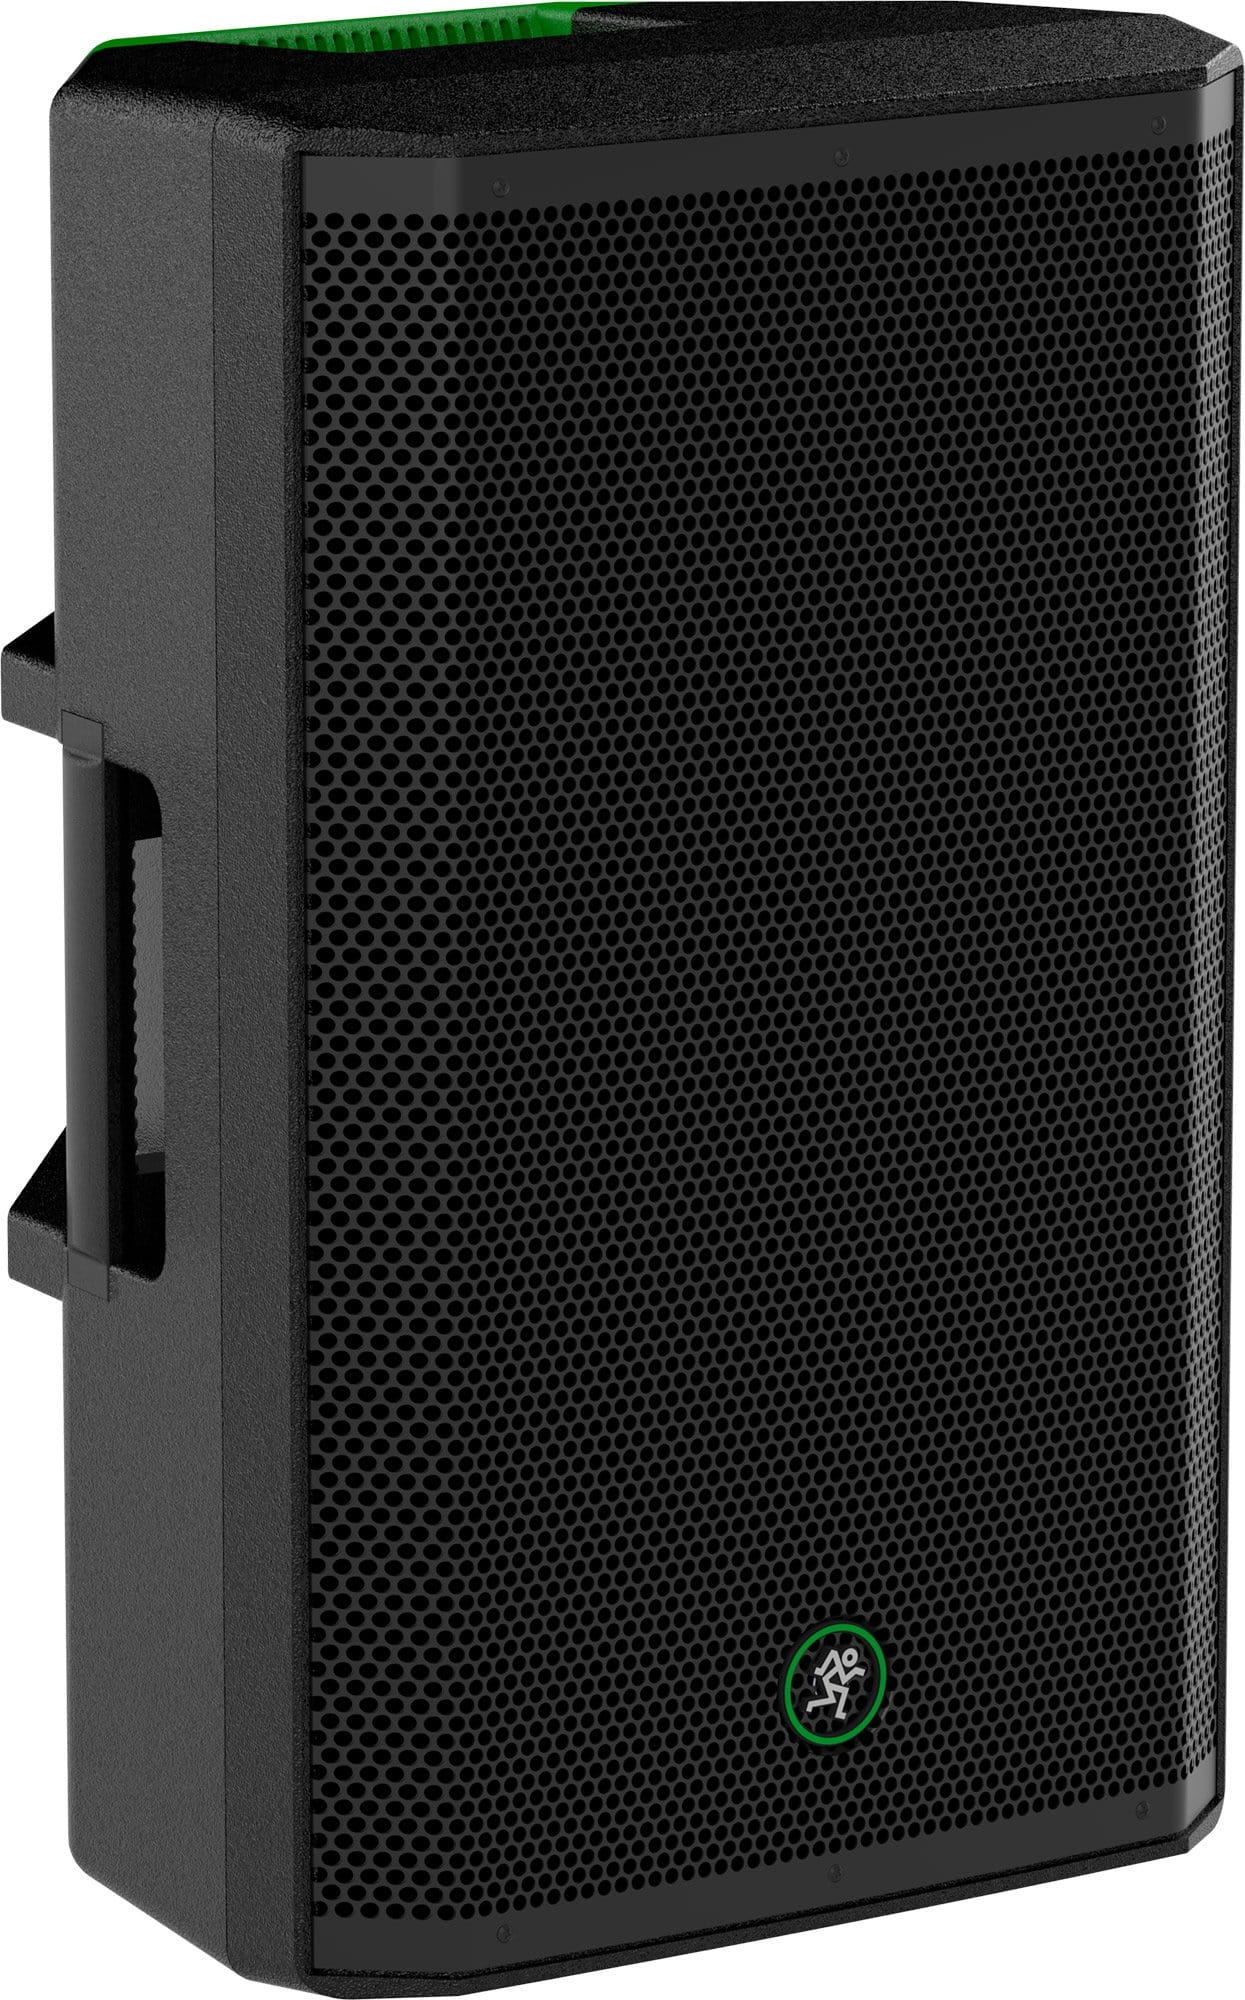 Mackie Thrash215 15-Inch 1300-Watt Powered Loudspeaker - PSSL ProSound and Stage Lighting